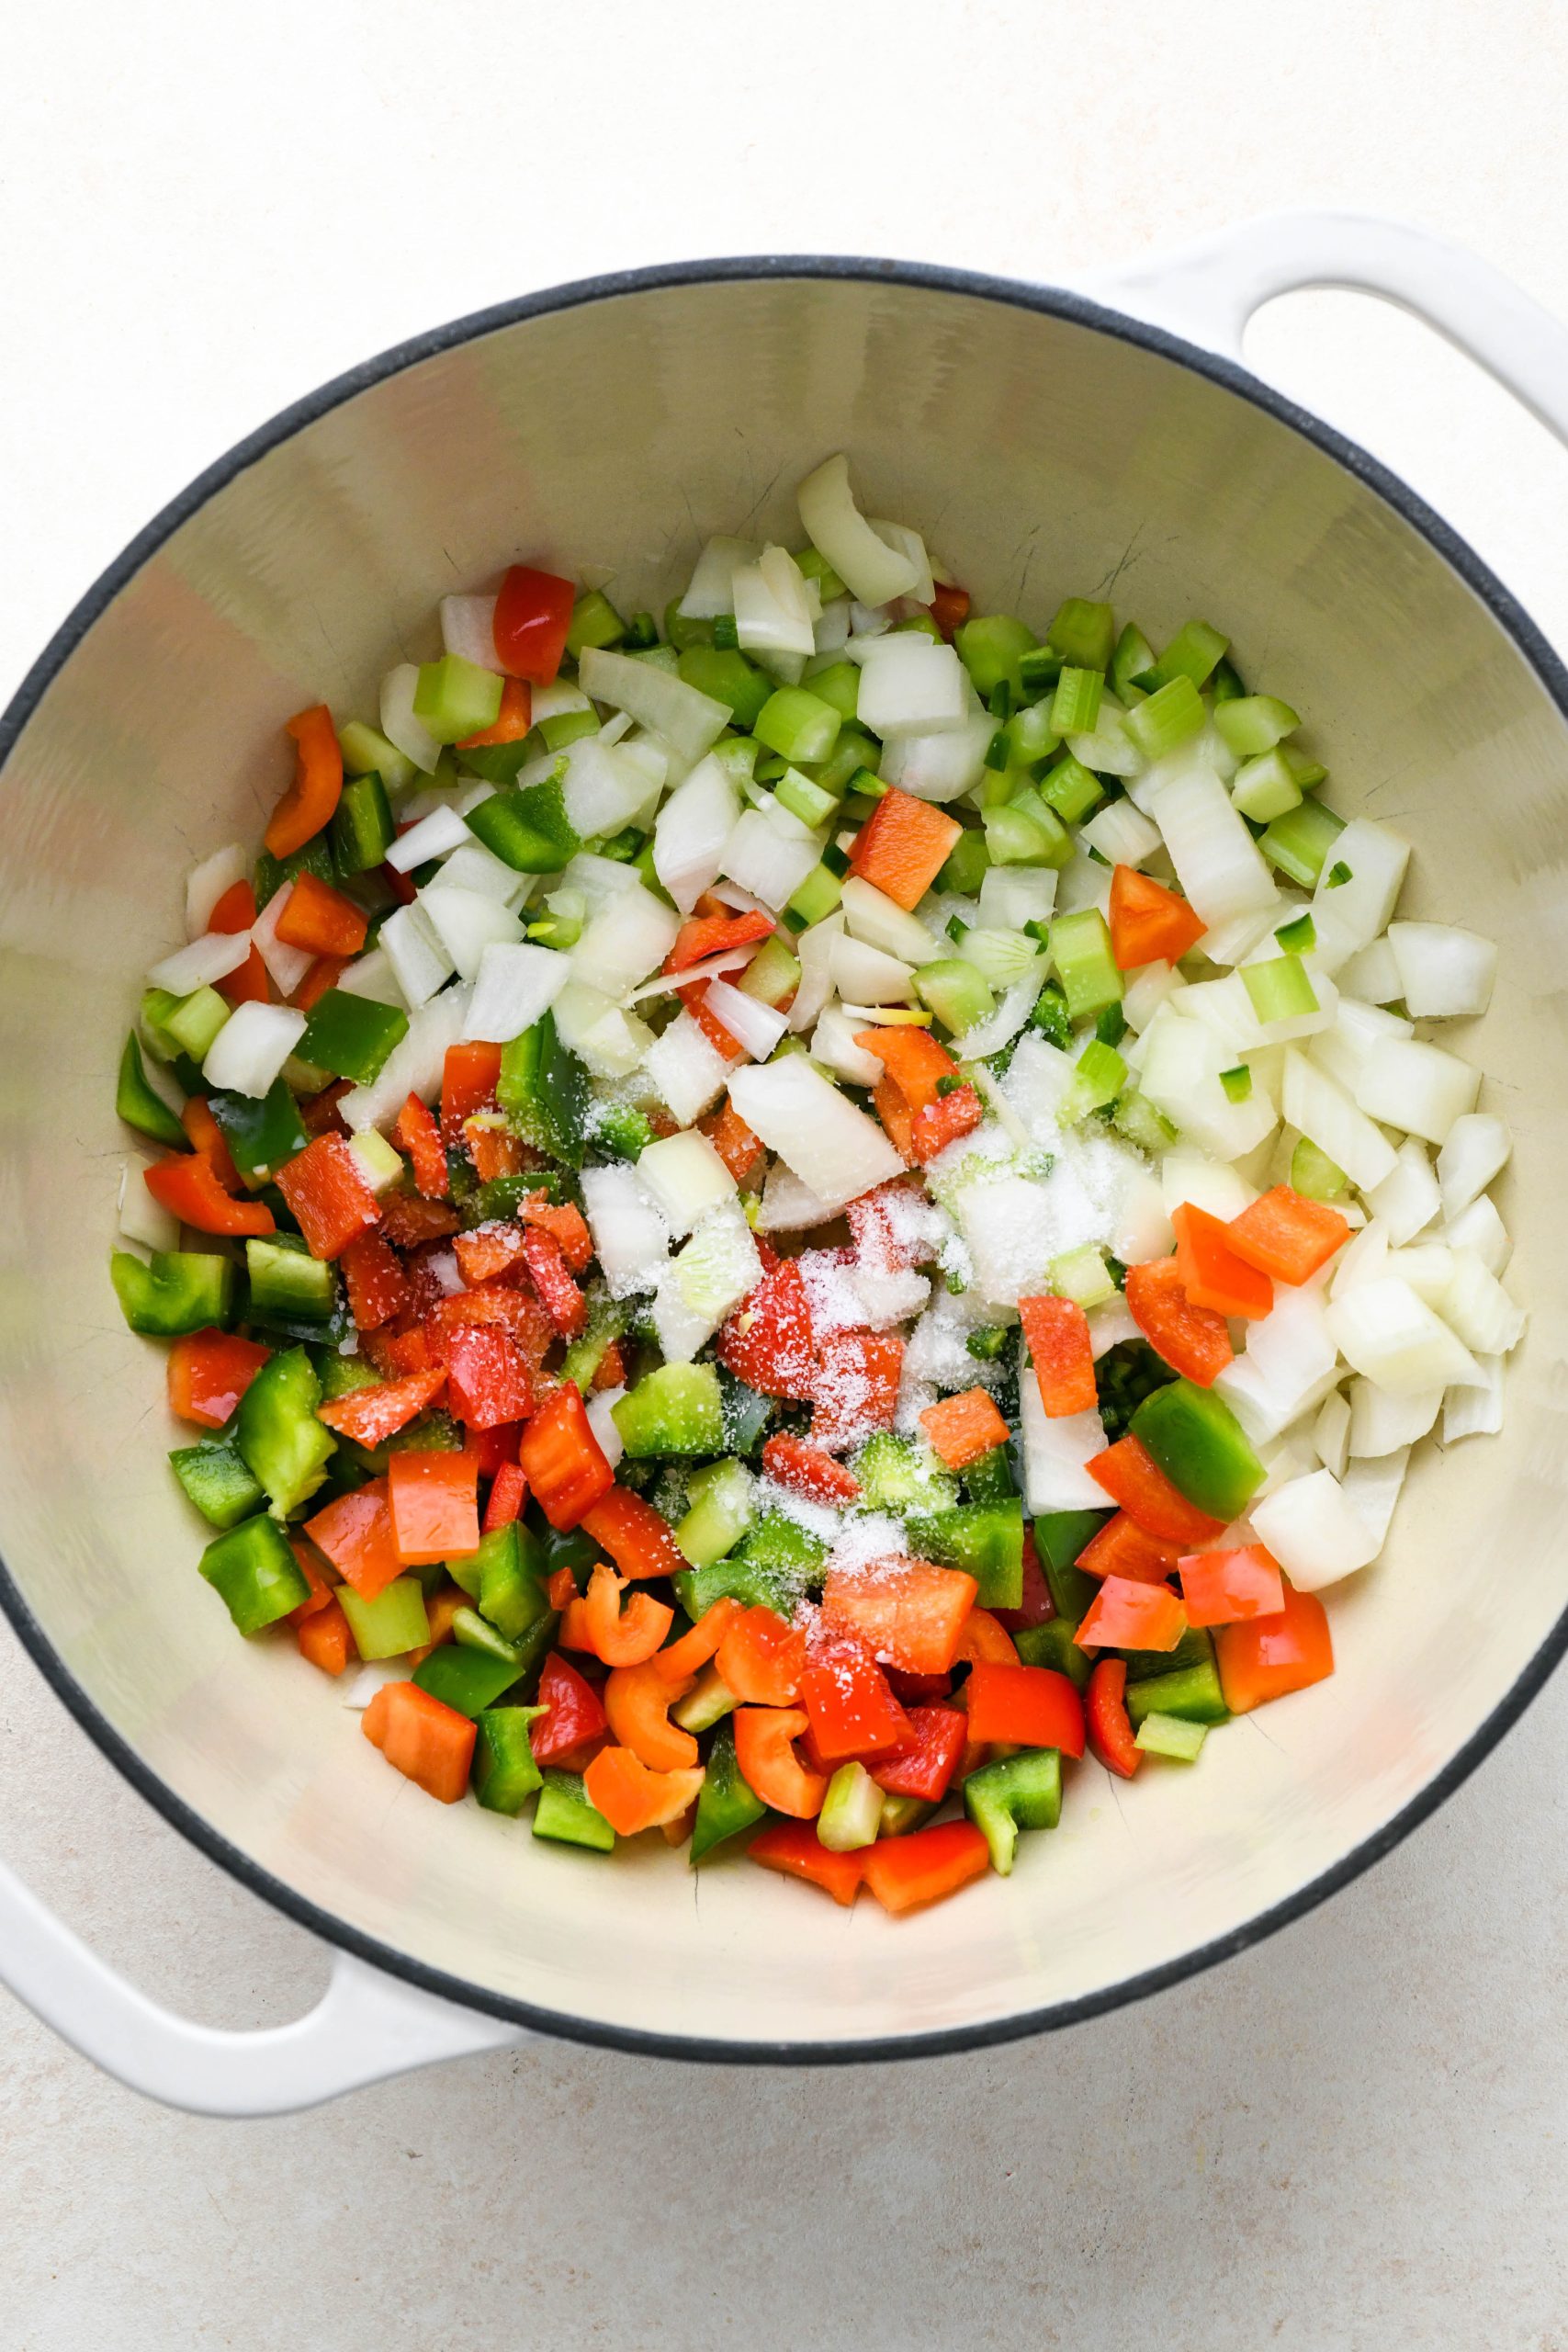 How to make vegan black bean soup: Raw veggies in a large soup pot.